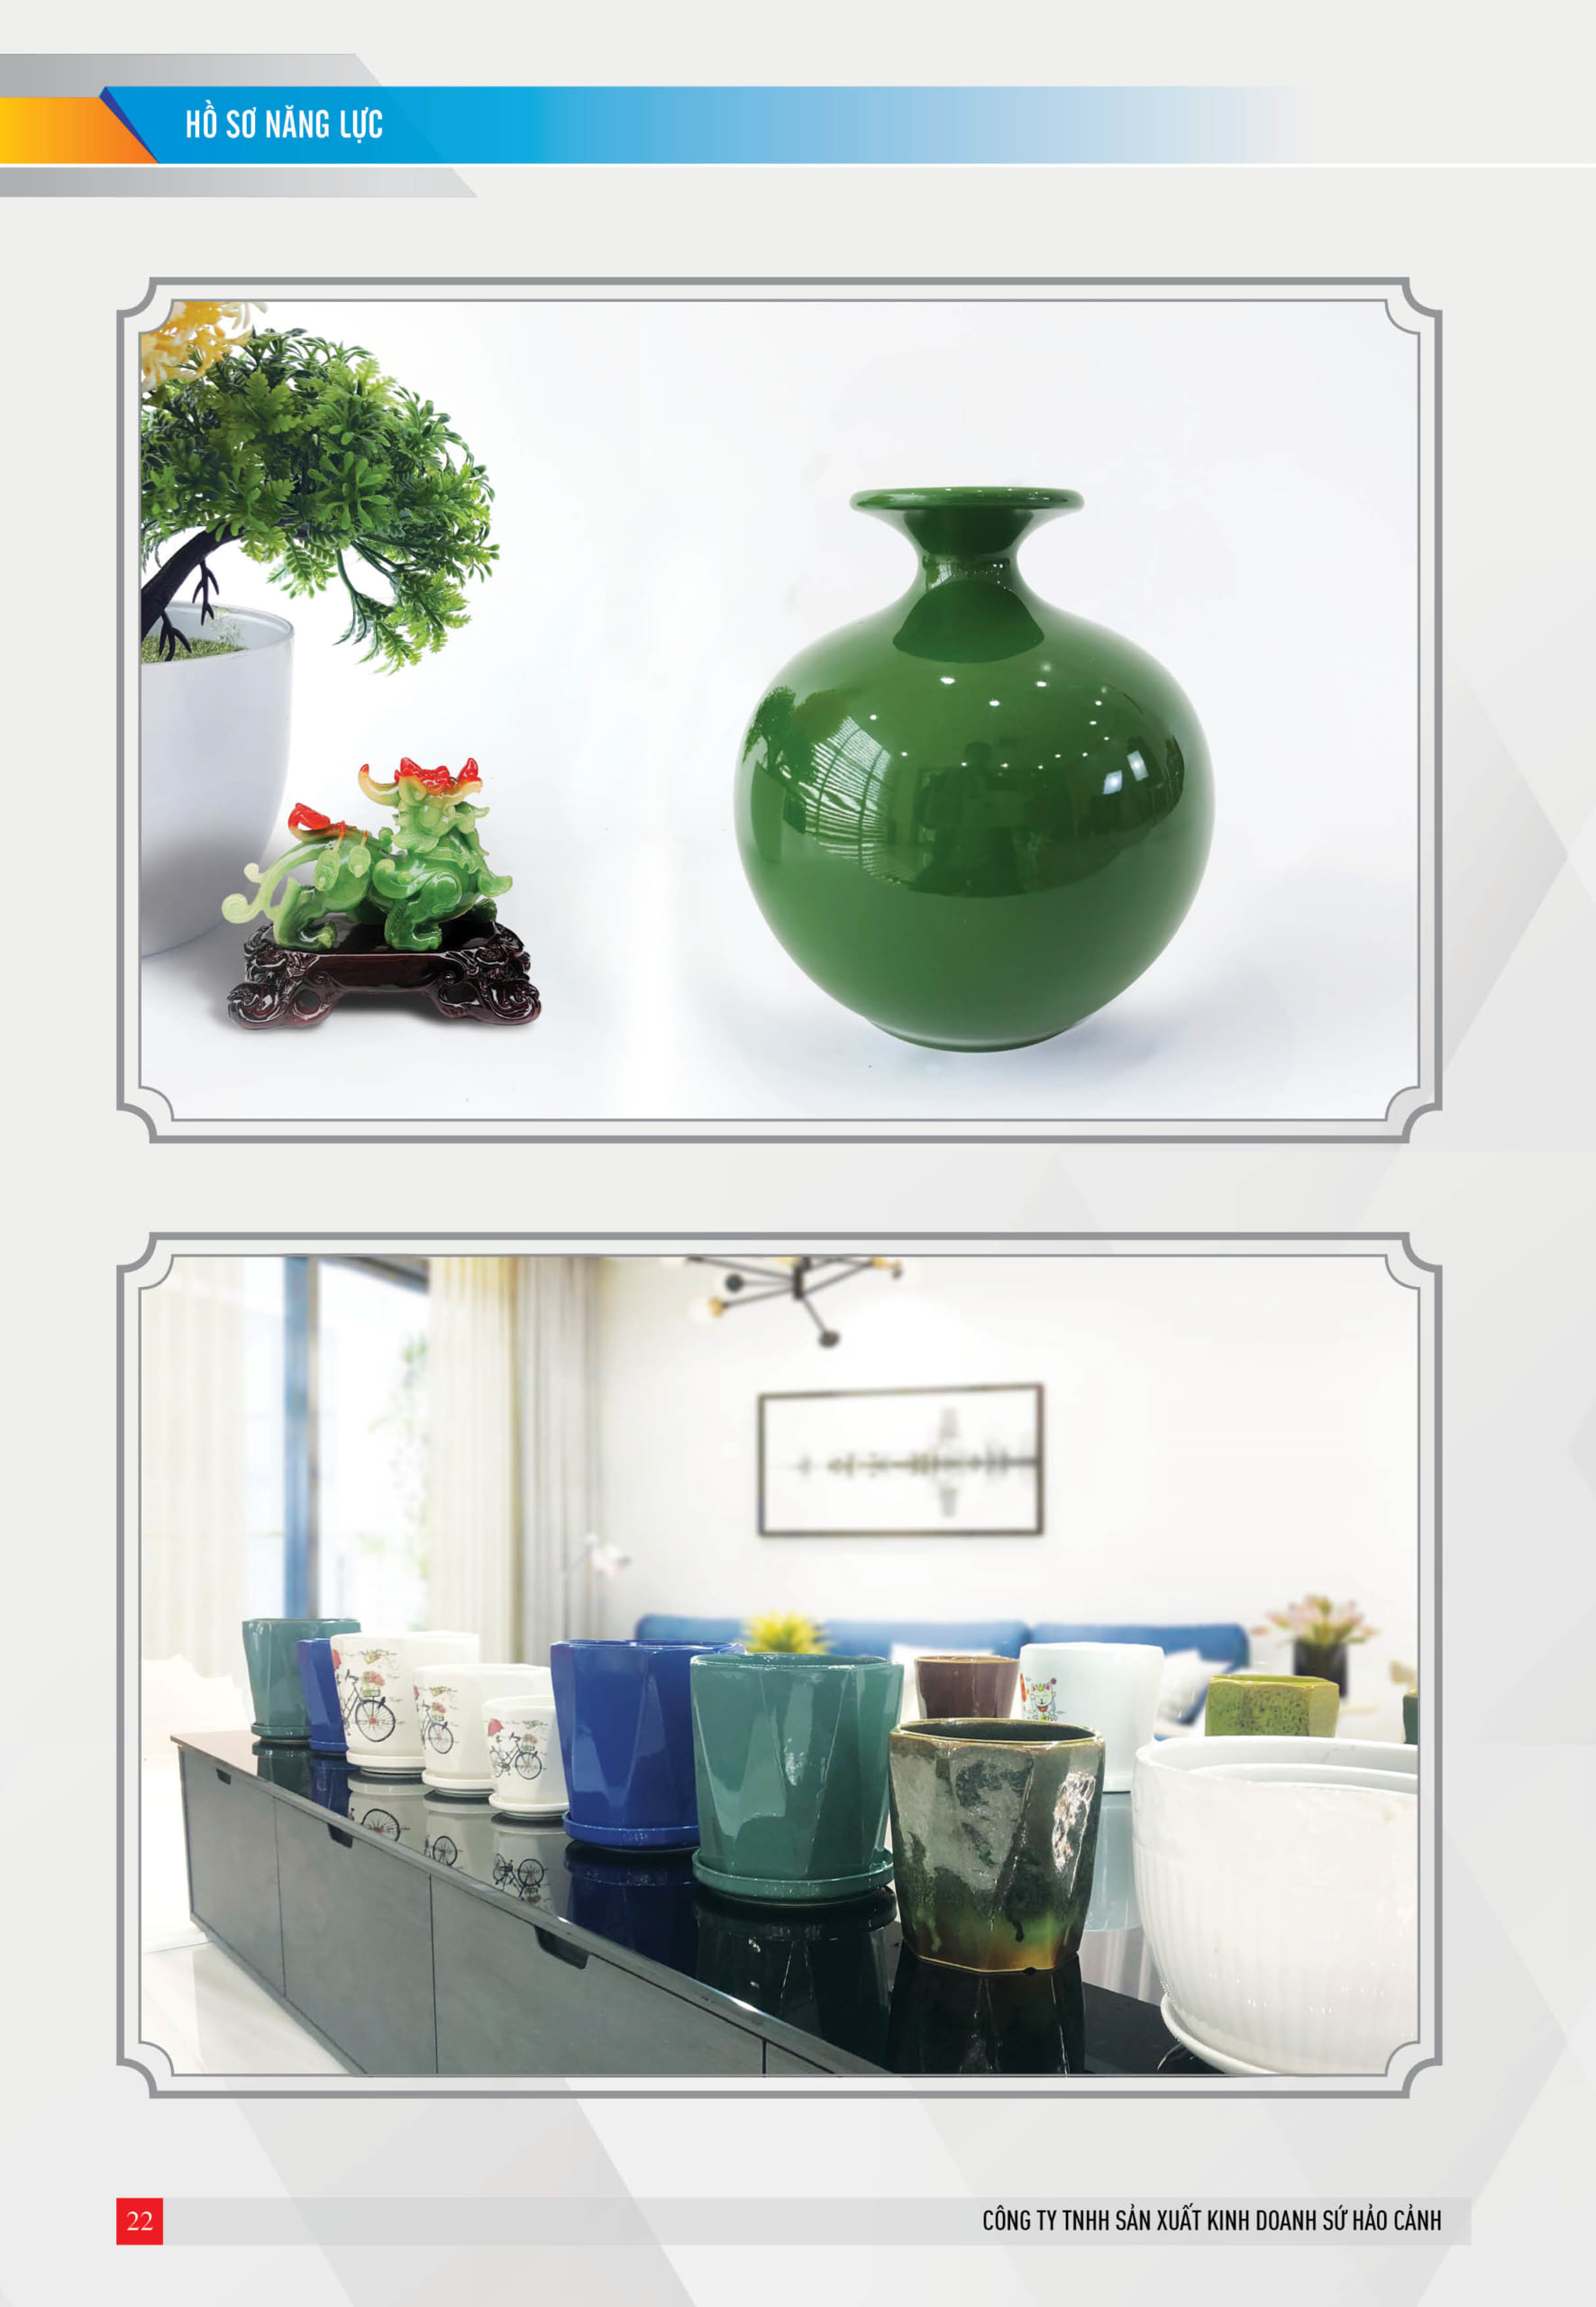 Hao Canh Ceramic Company Profile 25 scaled